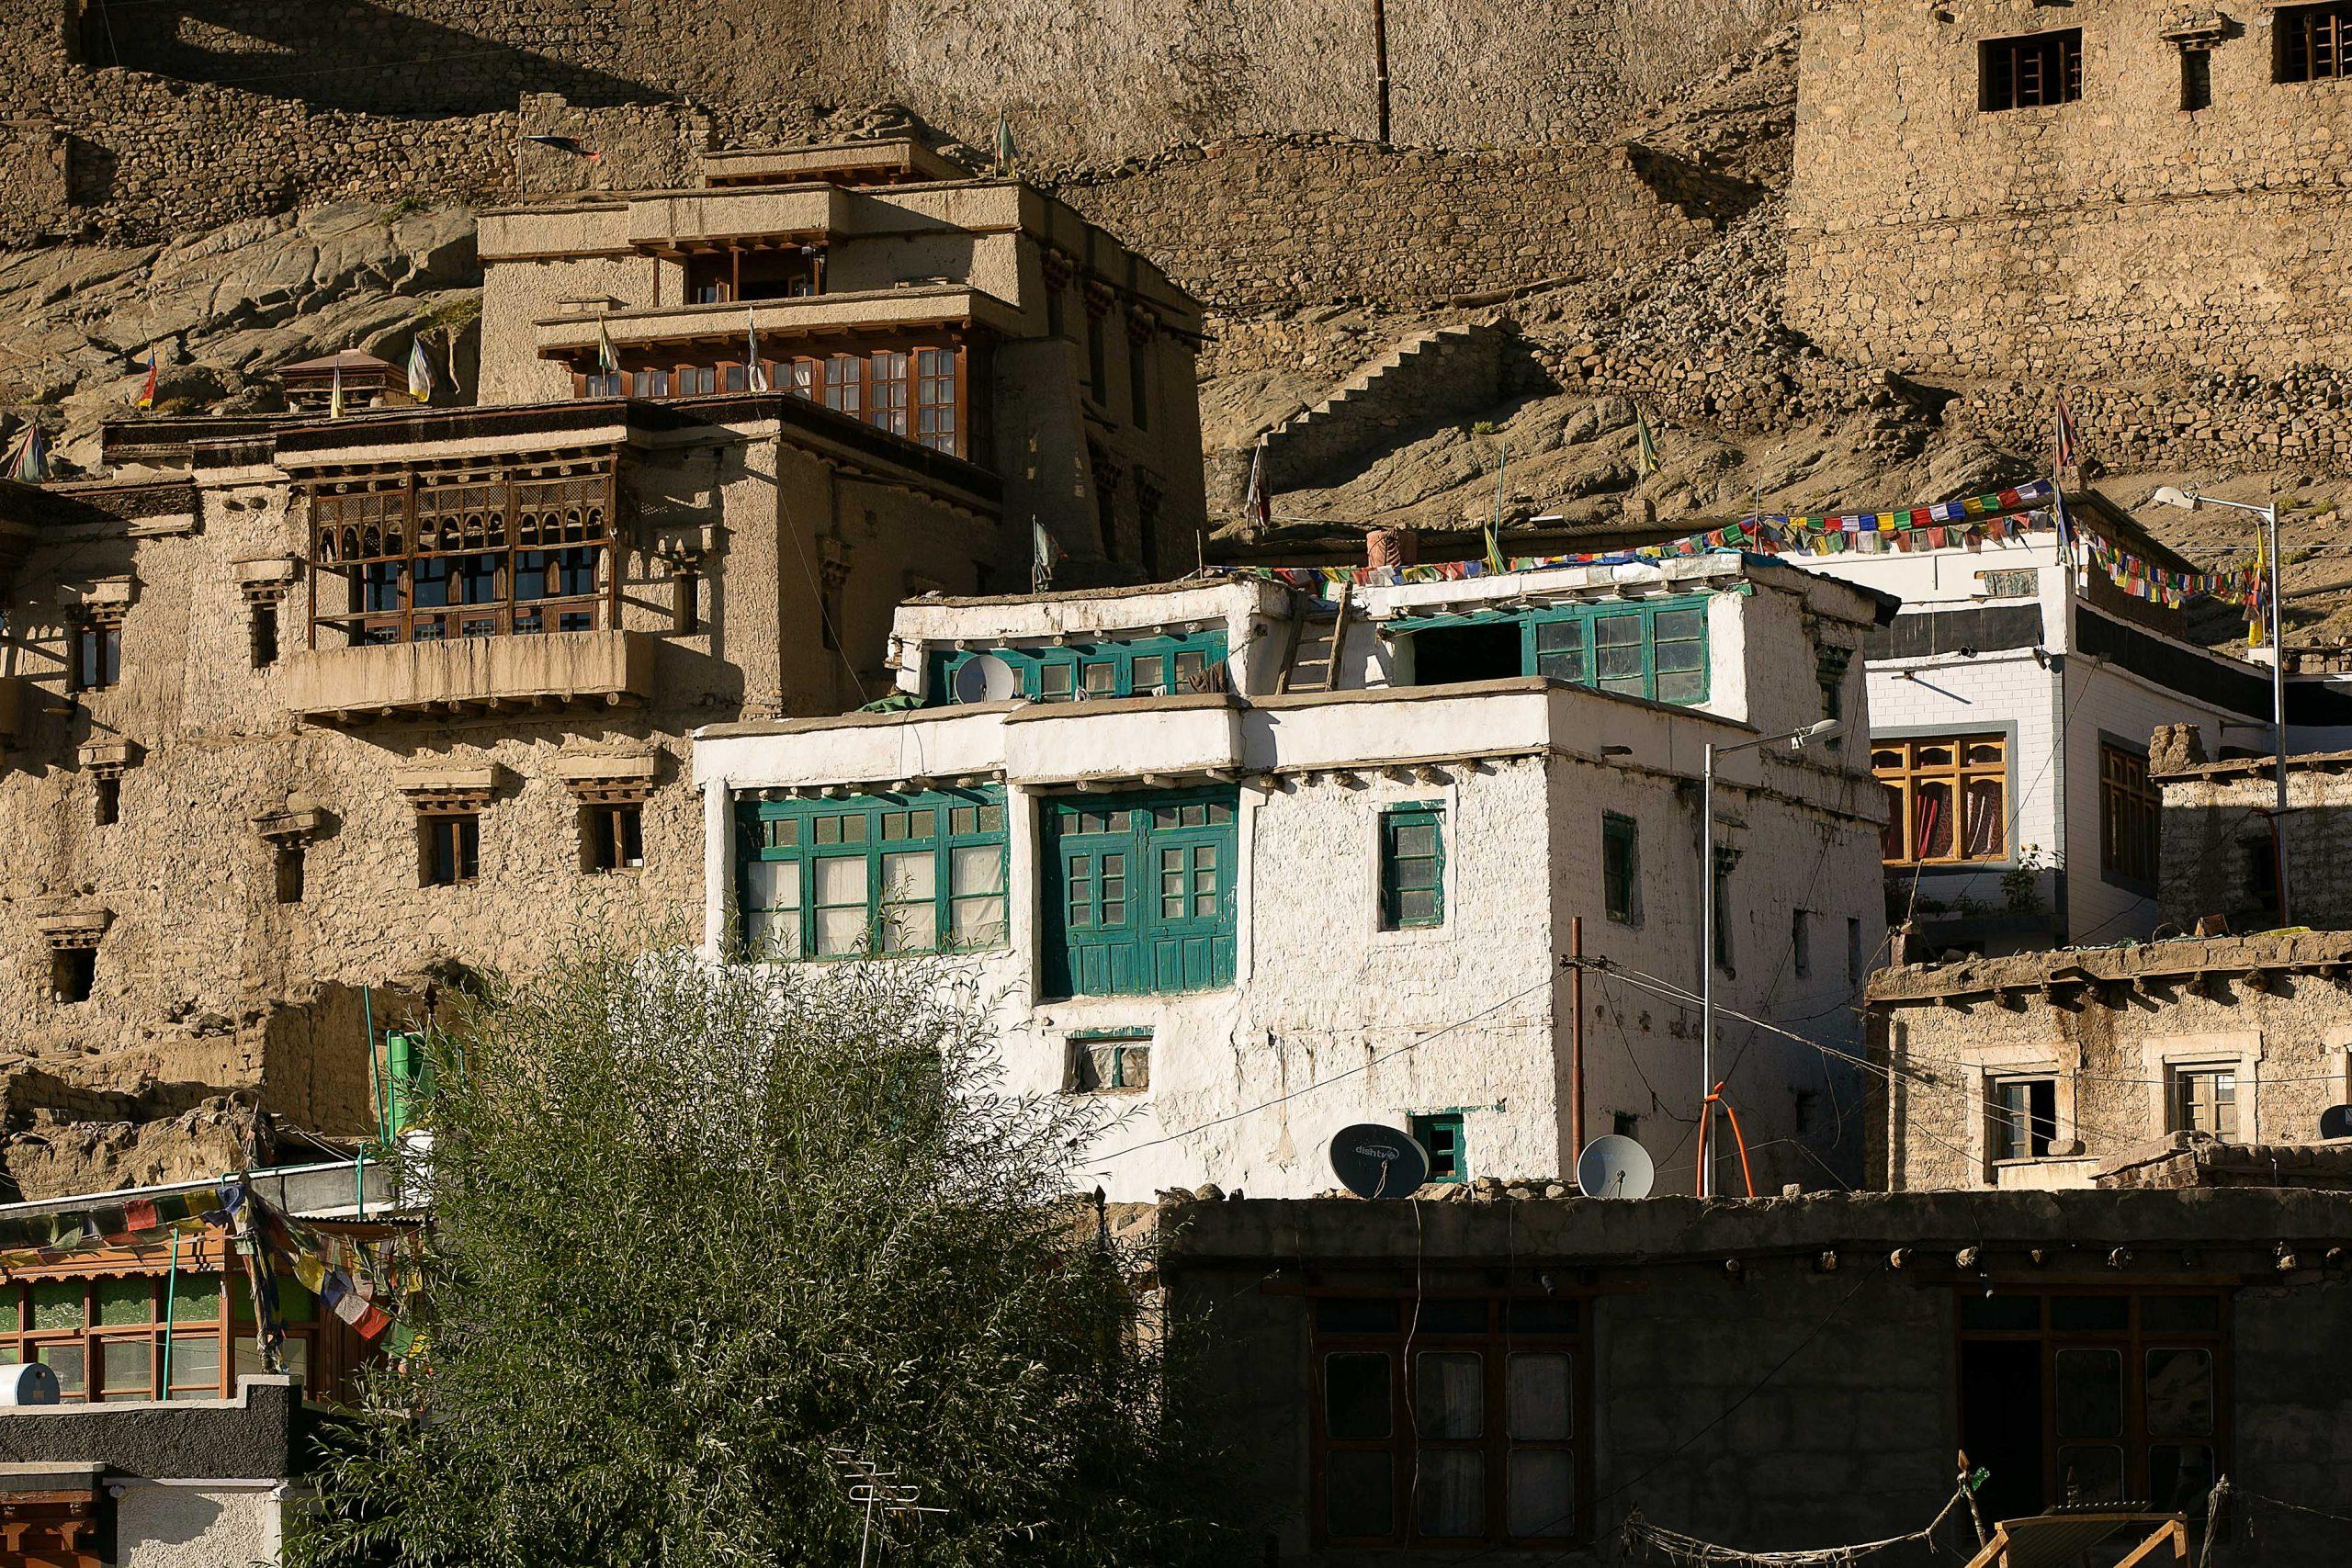 The Flat Rooftops of Ladakhi Homes